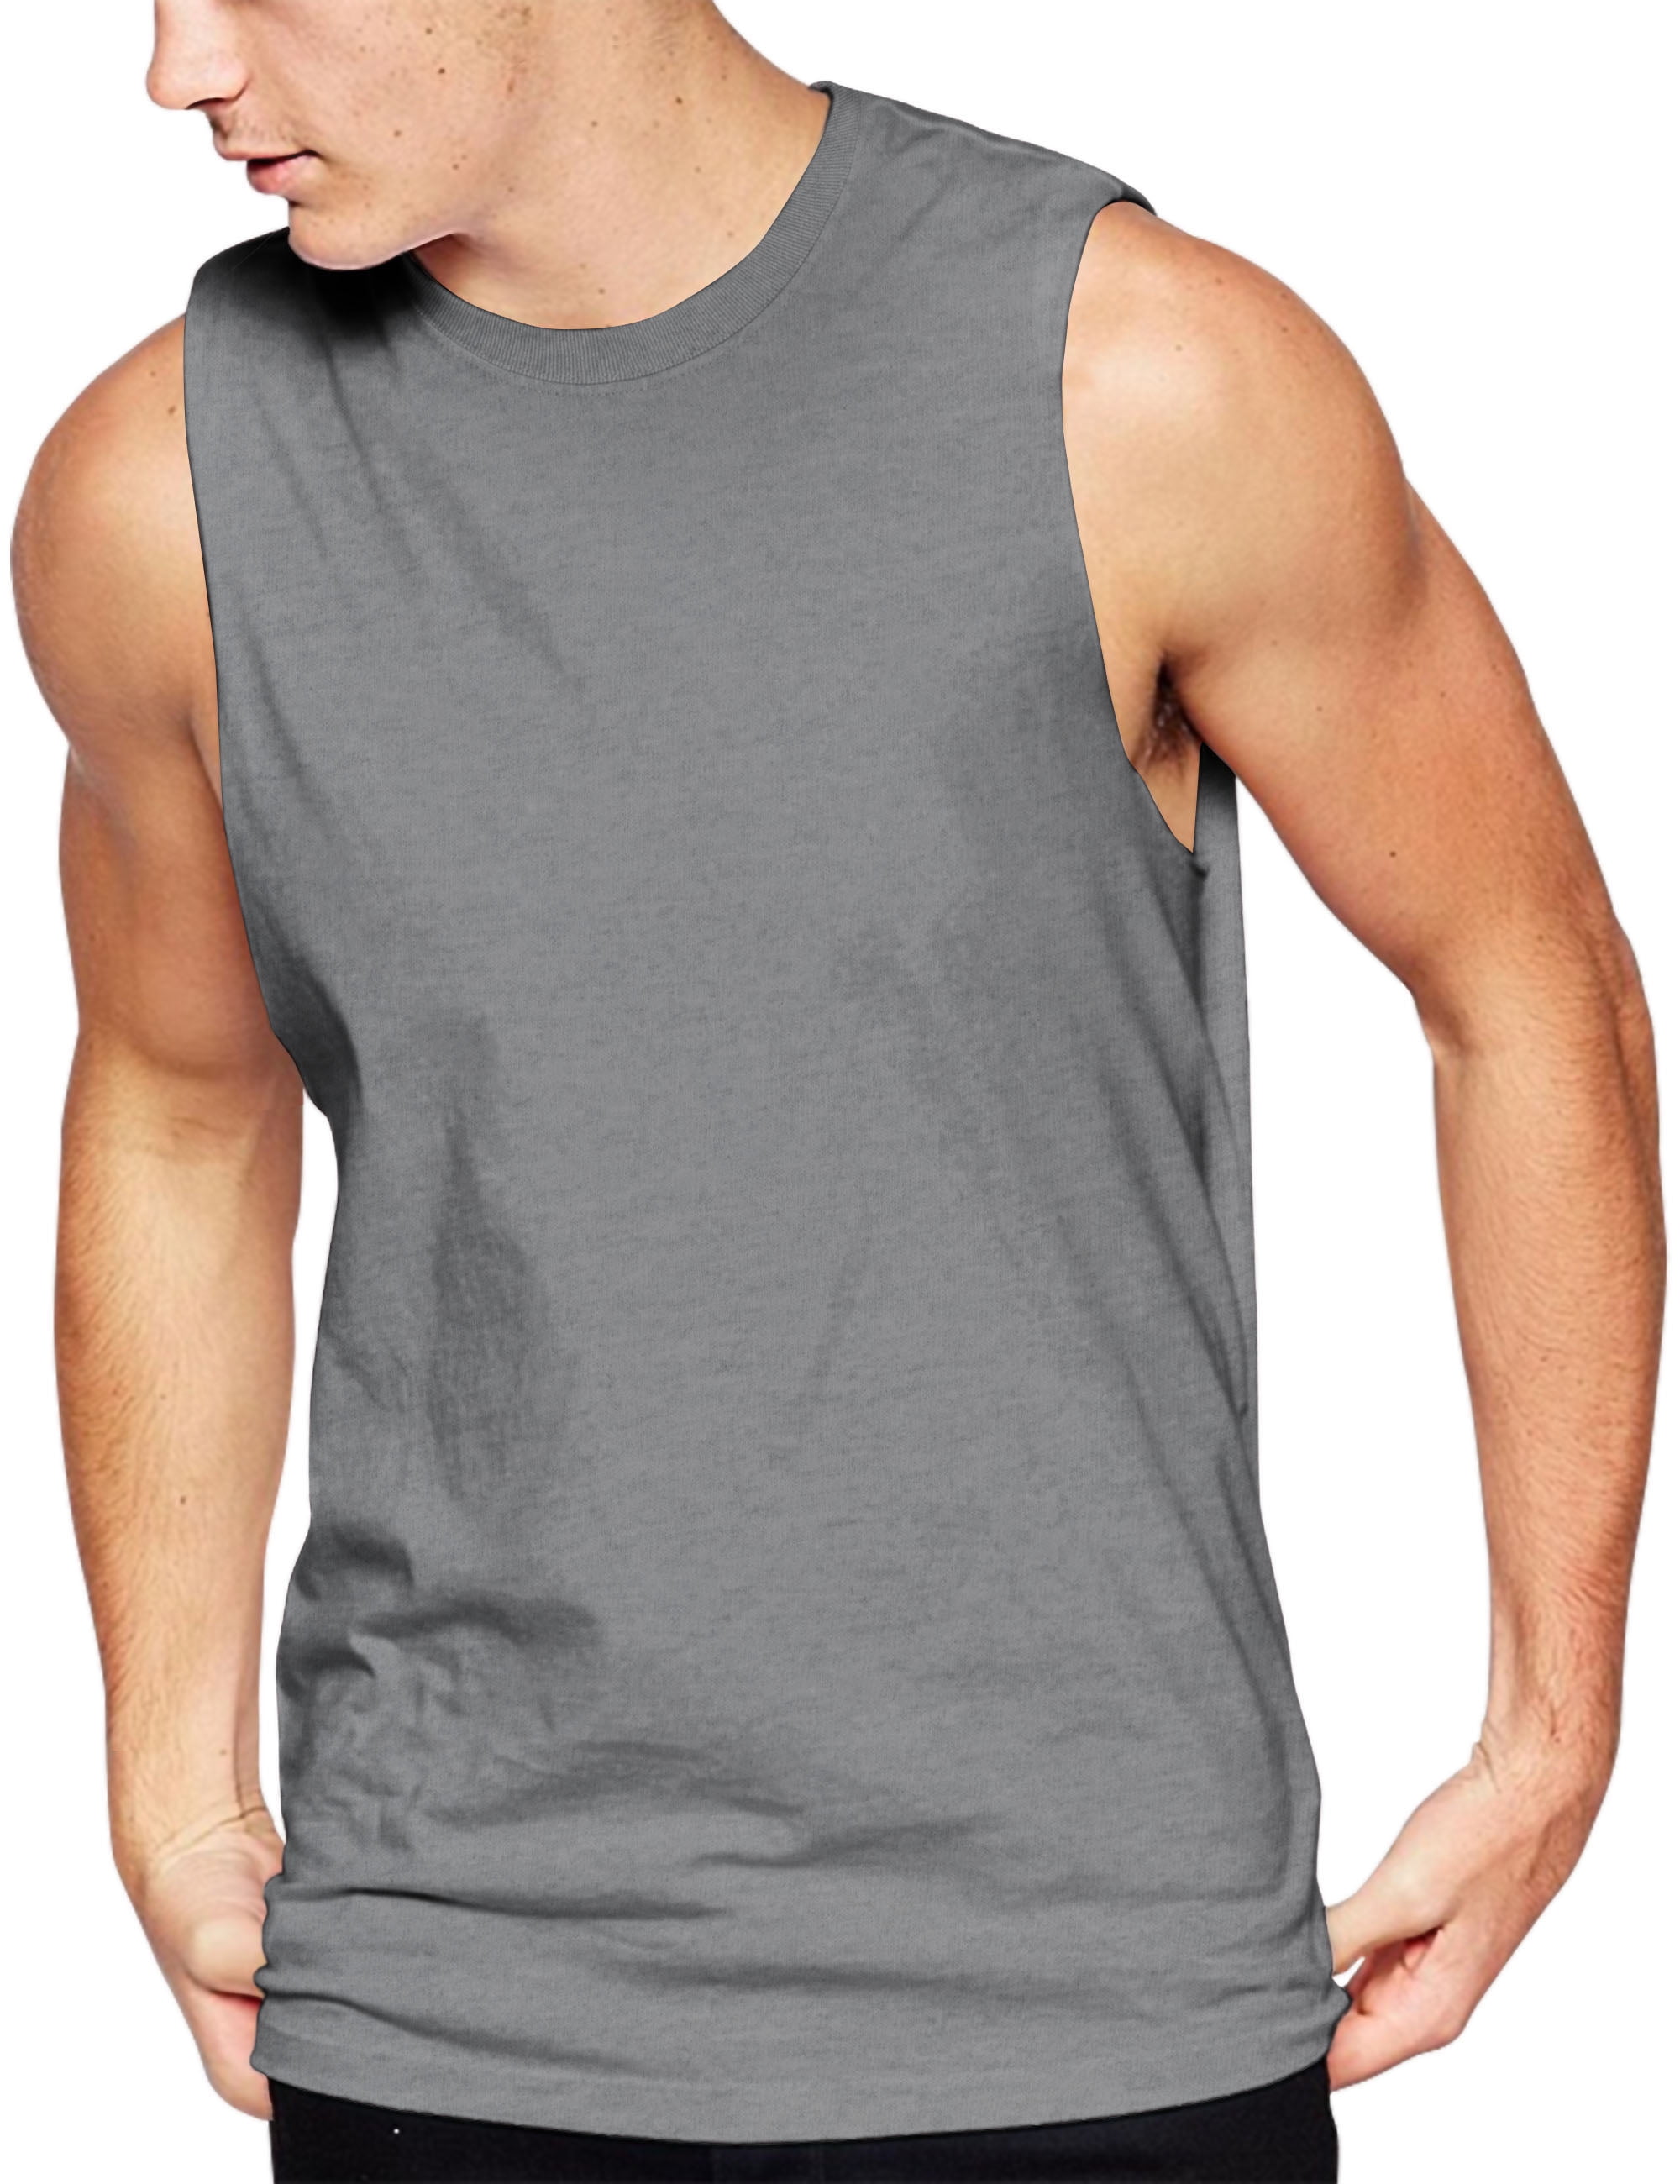 Mens Tank Tops Dragon Silhouette Shirts Summer Sport Tees Muscle T Shirt Top